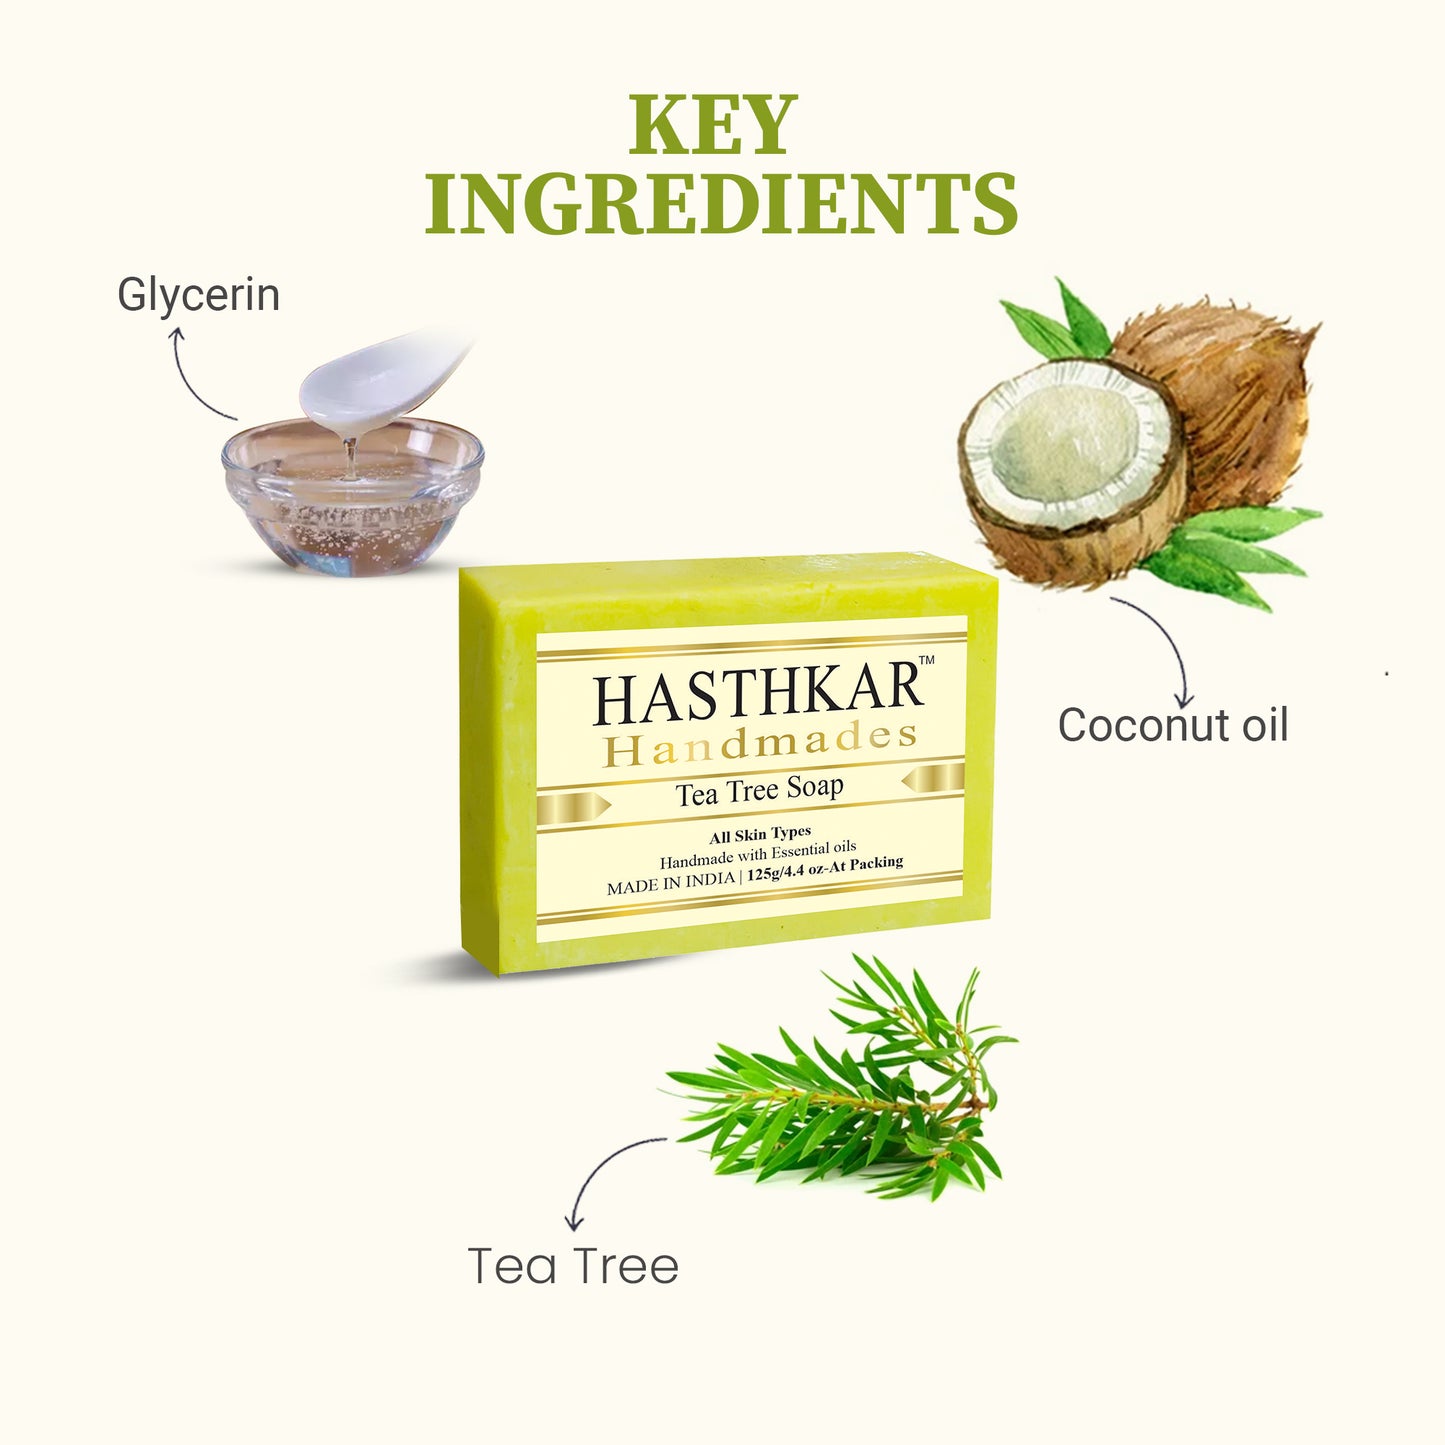 Hasthkar Handmades Glycerine Tea tree Soap 125gm Pack of 2